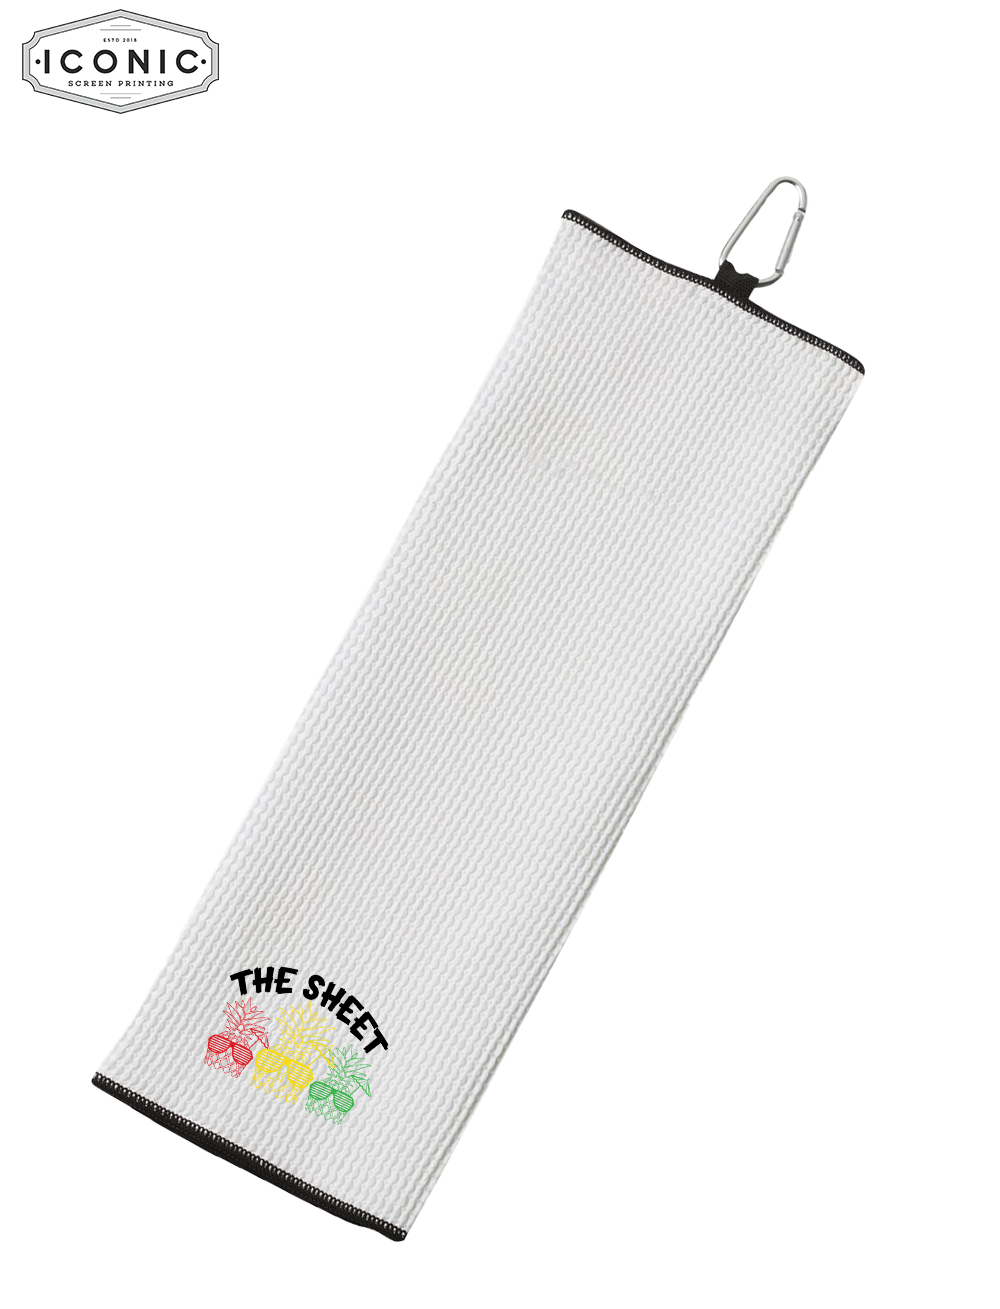 The Sheet Fairway Golf Towel